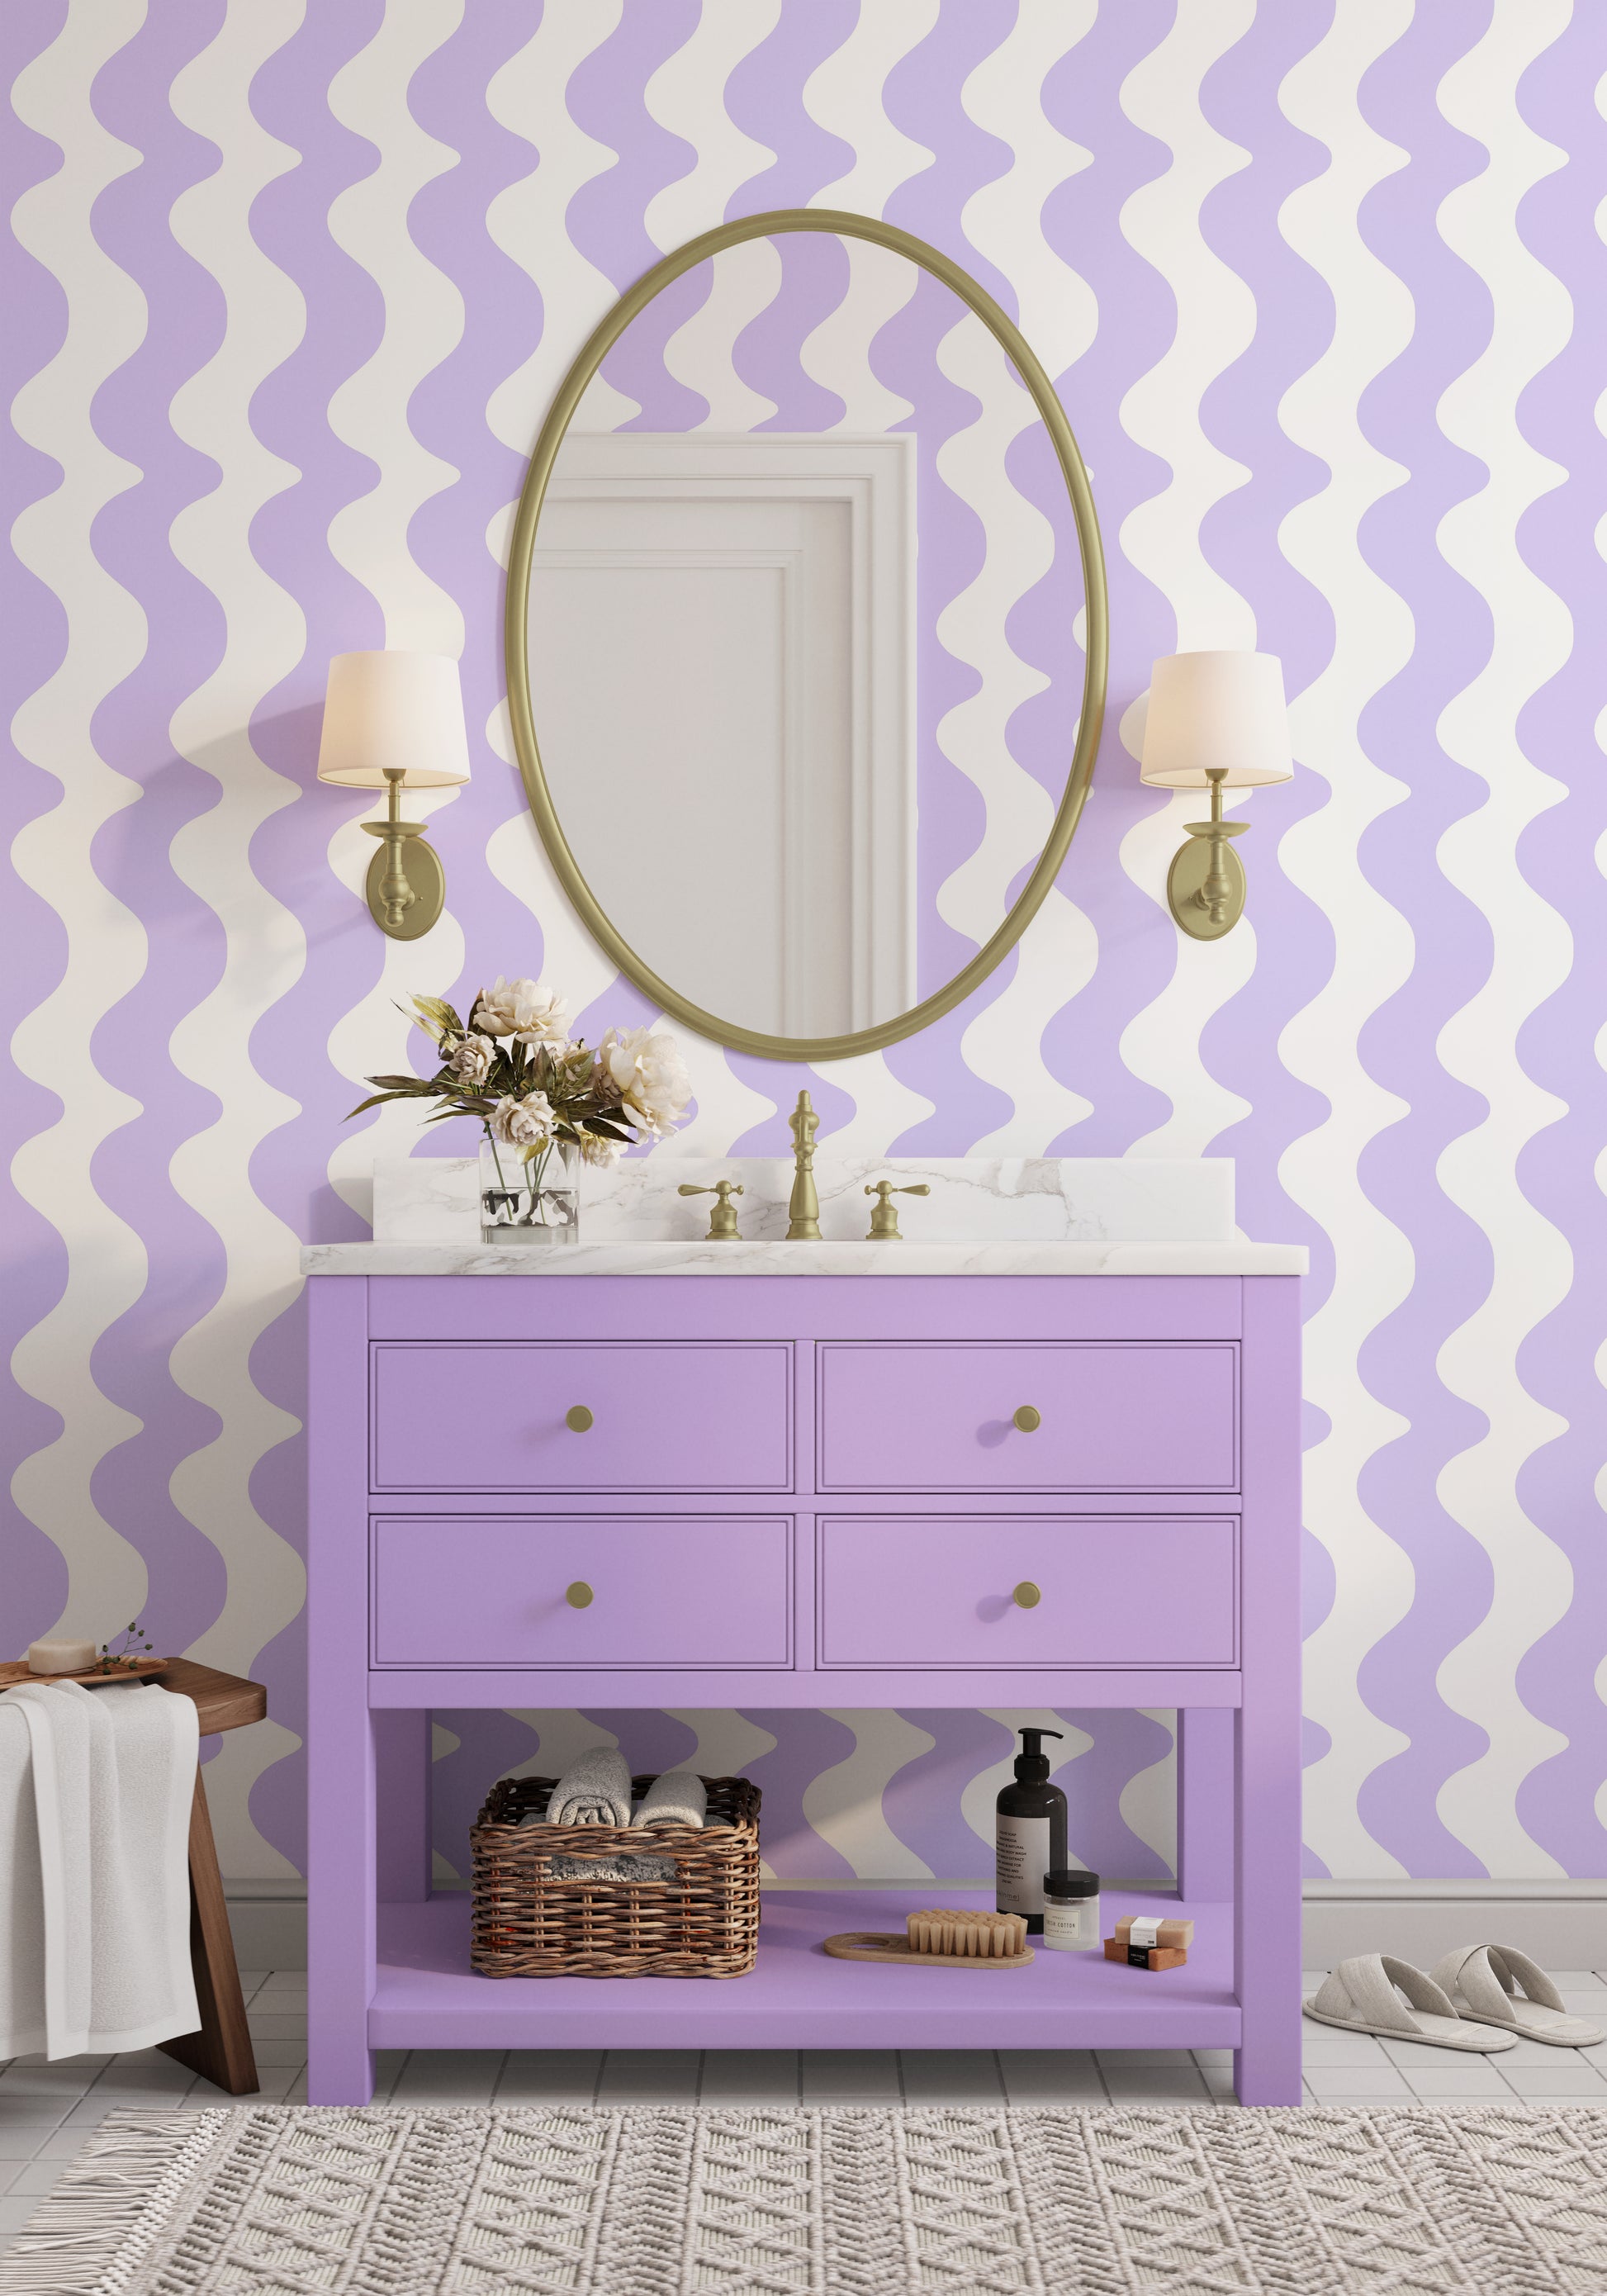 pastel purple wallpaper with wavy pattern for bathroom or girls bedroom walls